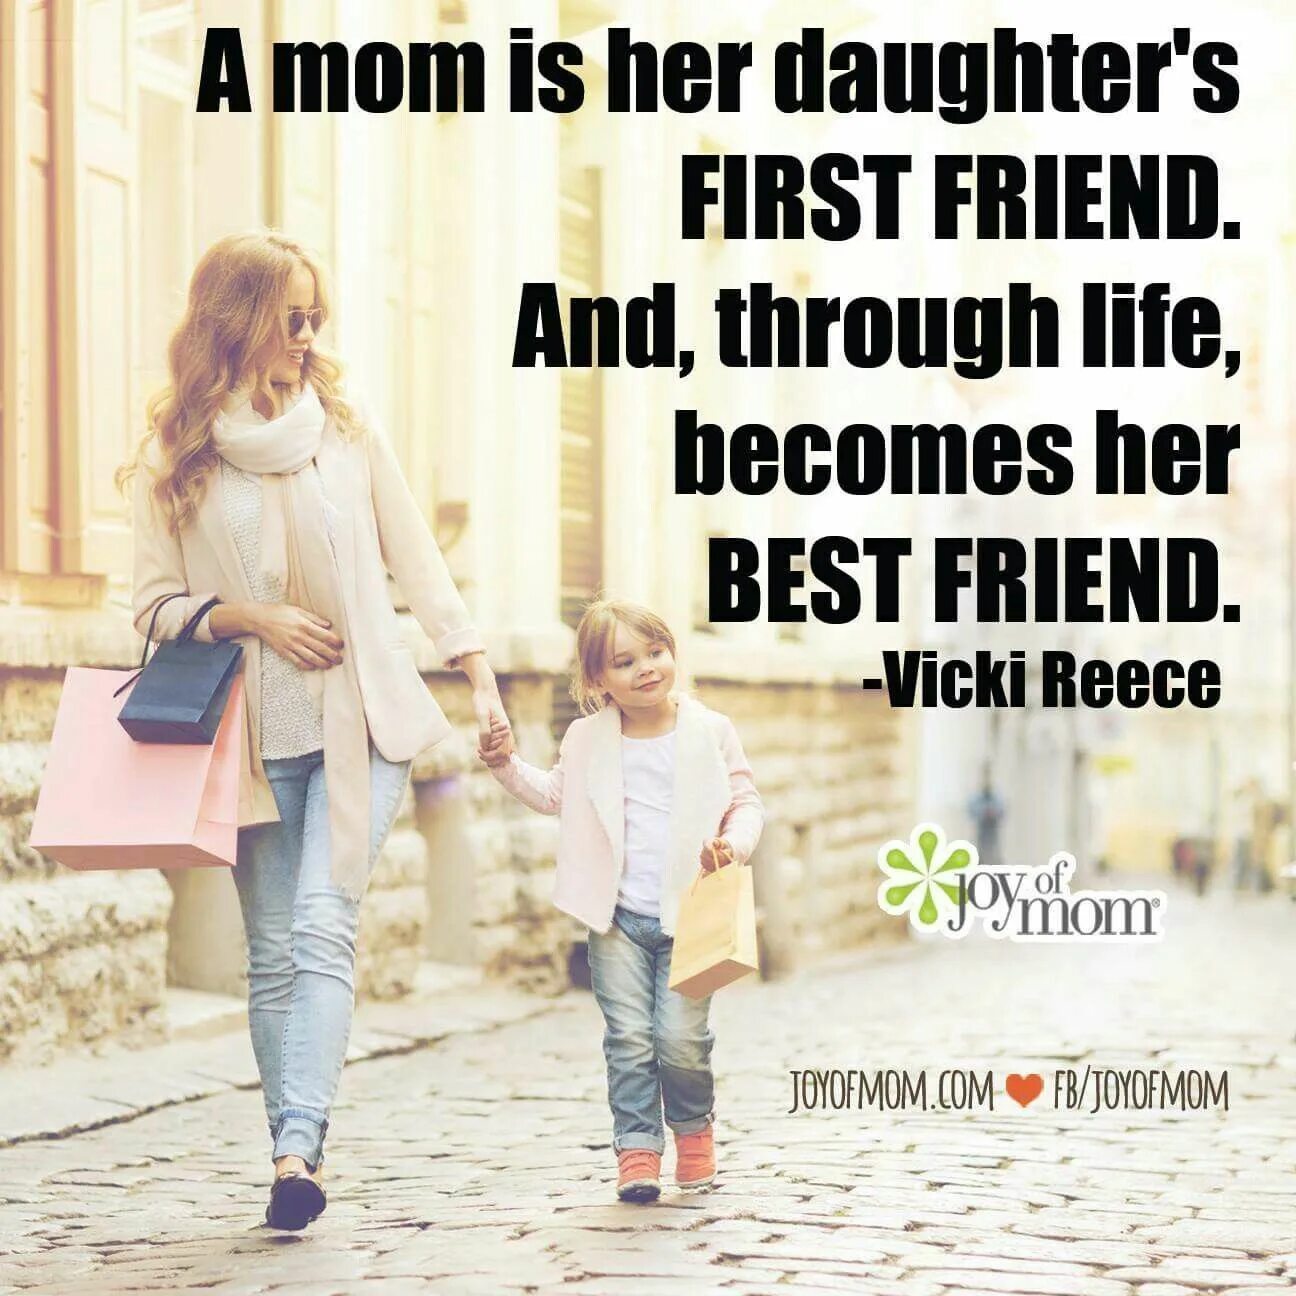 My daughter friend 1. Френд мом. Daughter friend. My mom is my best friend.